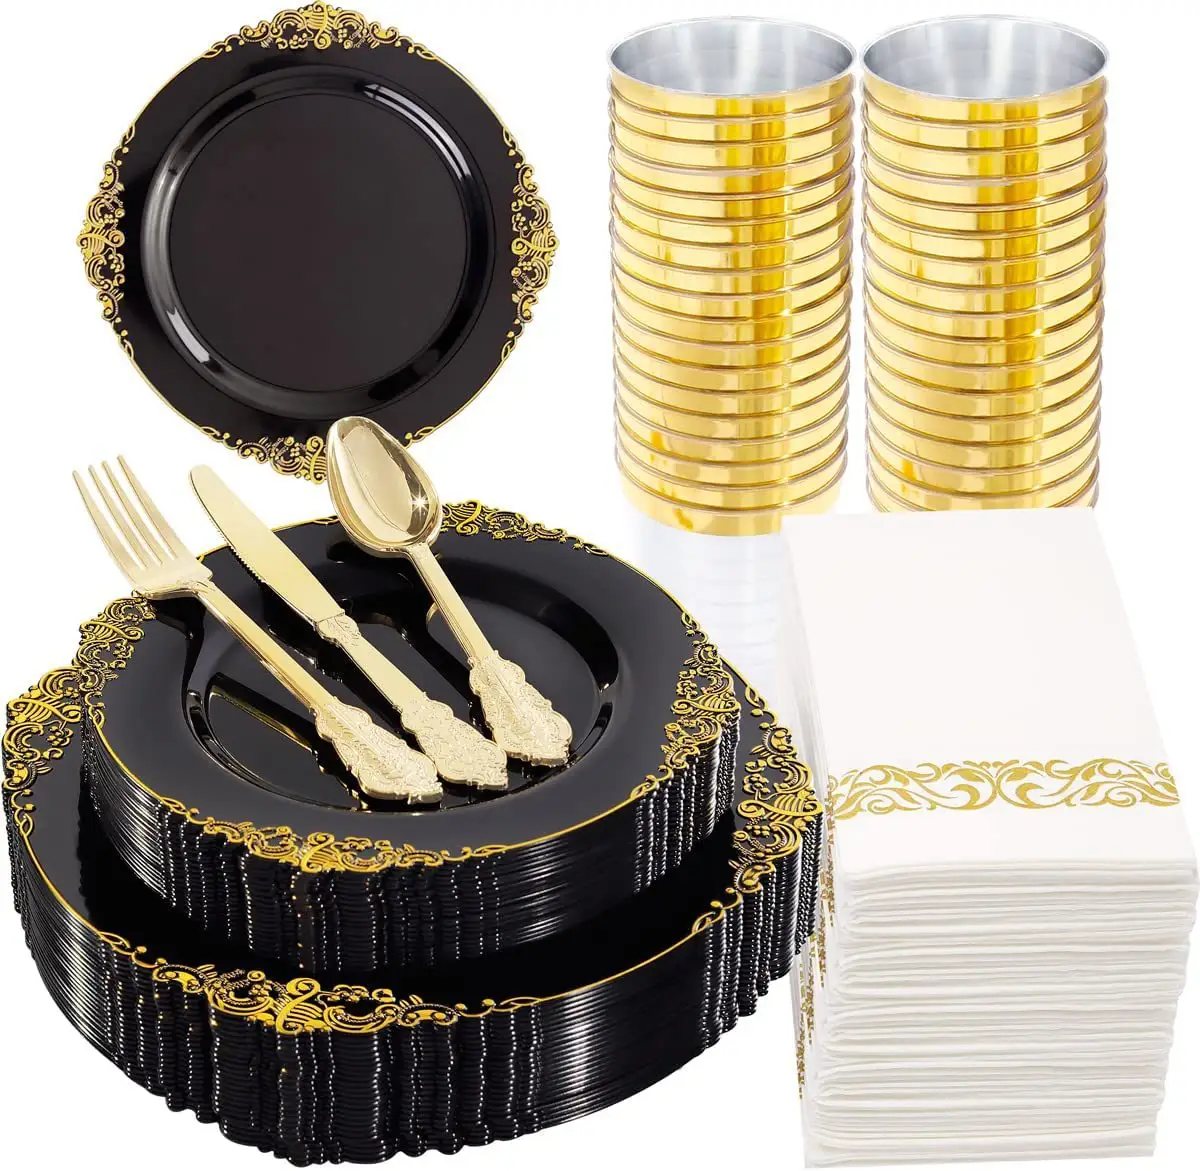 Kylong Round antique plastic gold rim dinner plate 13" black charger plates wedding bulk for Table Setting